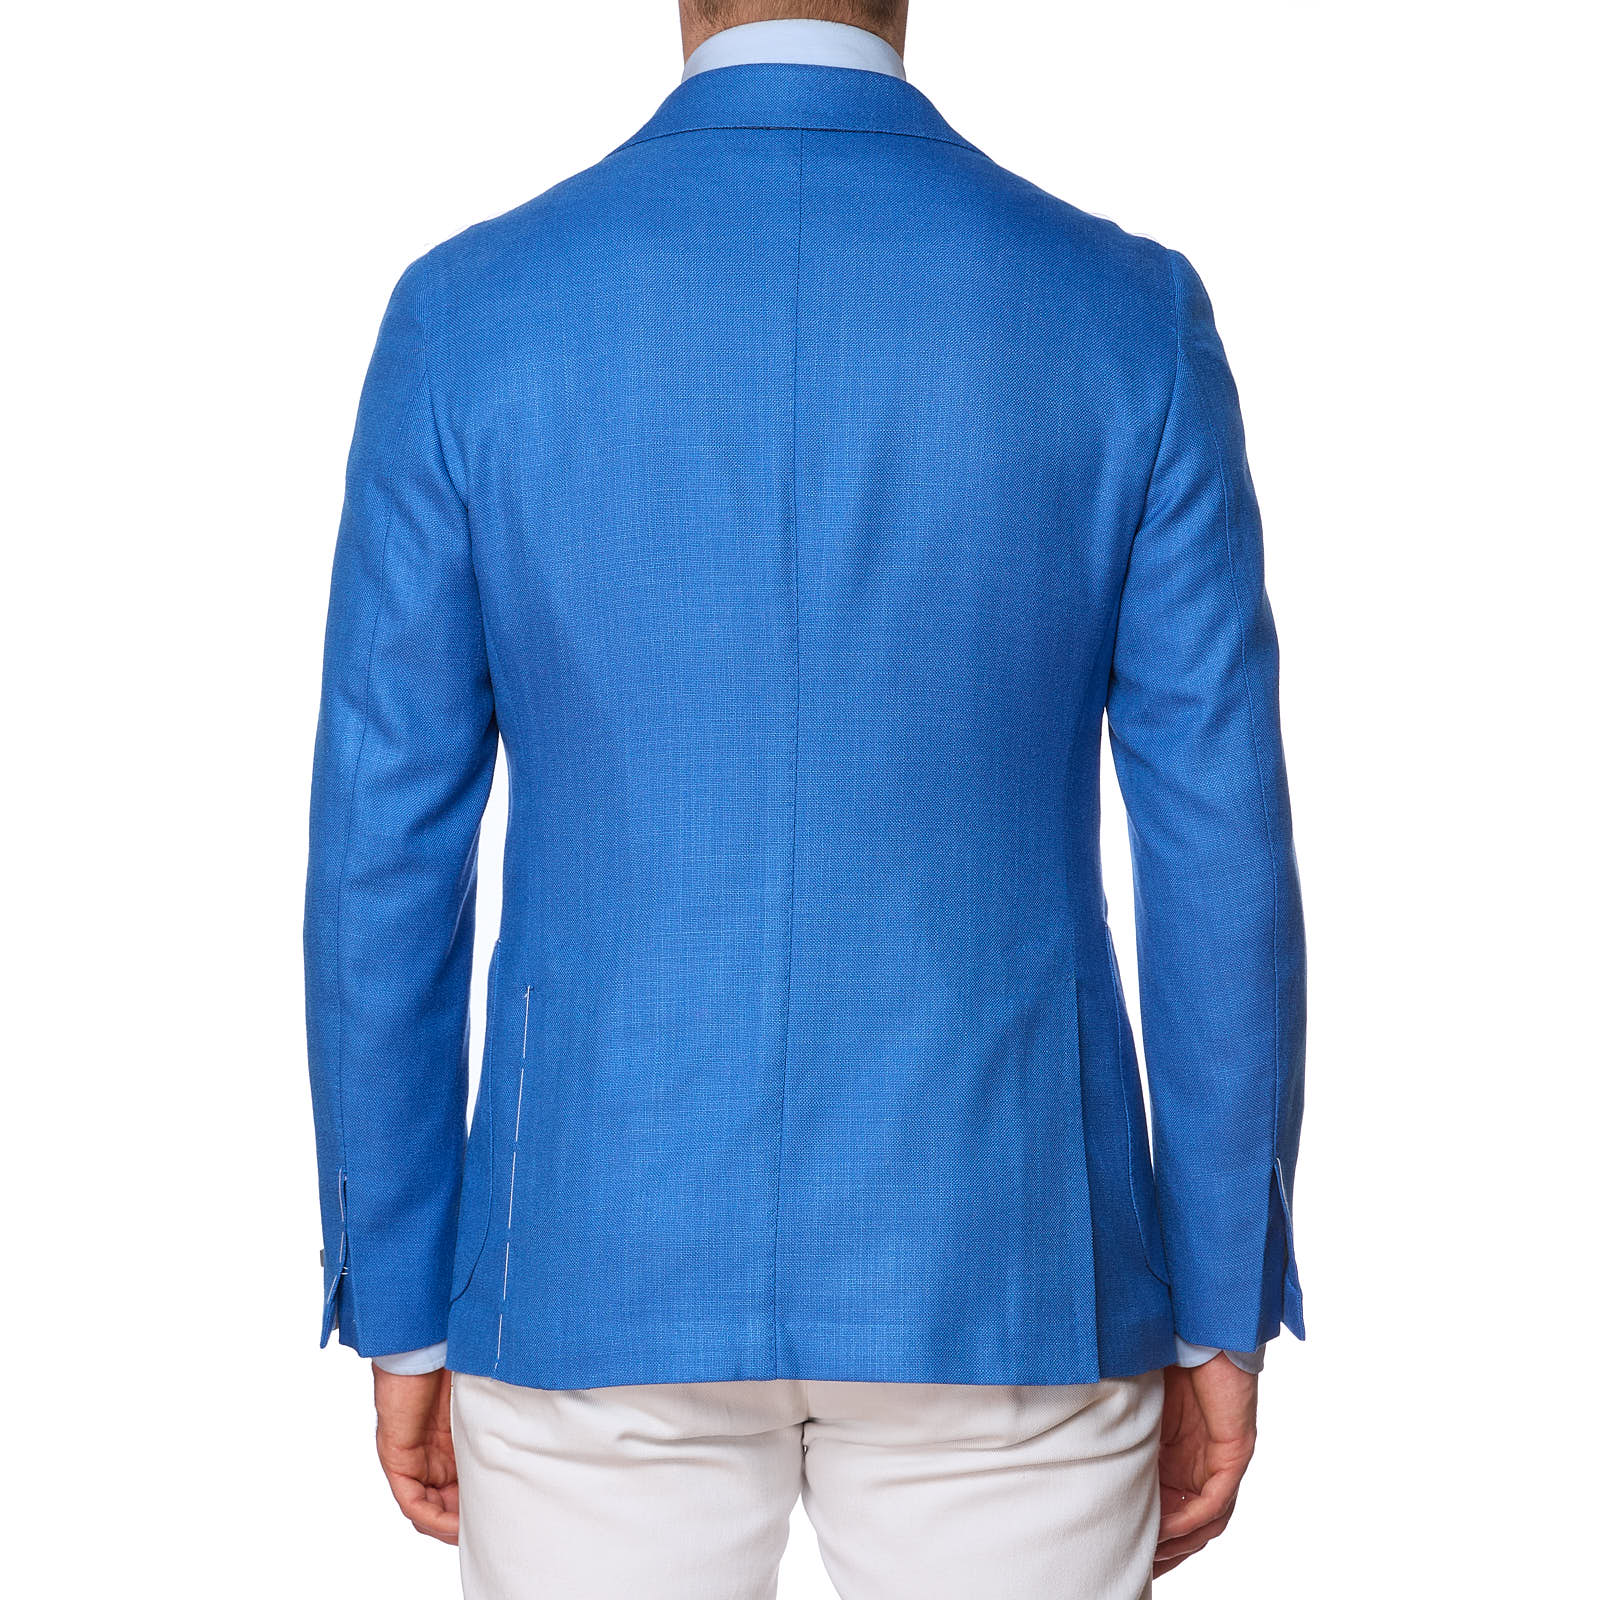 MAURO BLASI Napoli x VANNUCCI Handmade Blue Wool Jacket EU 48 NEW US 38